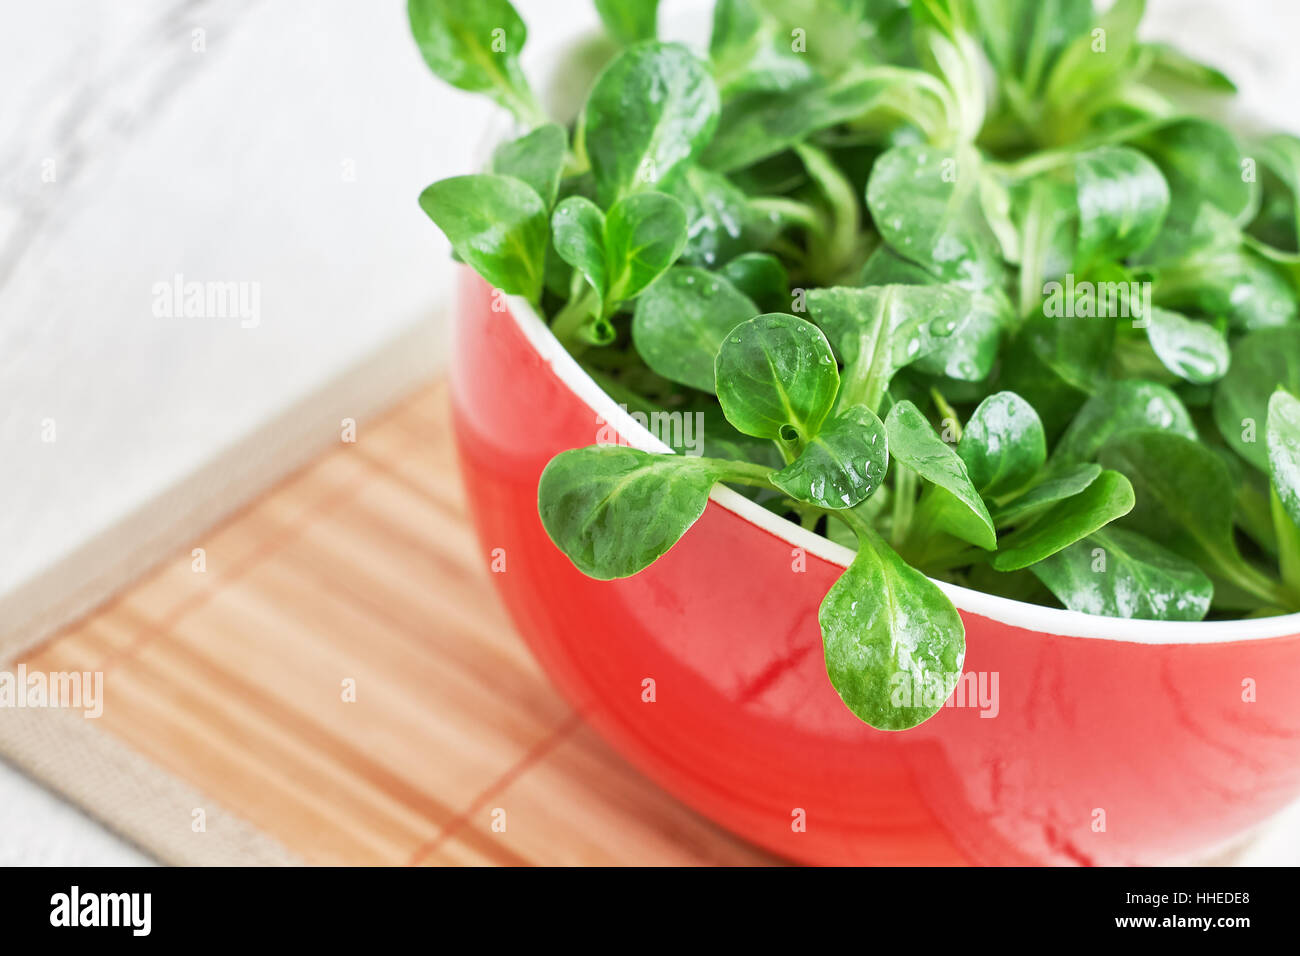 Corn salad plant, lamb's lettuce (Valerianella locusta), in red bowl. Copy space Stock Photo